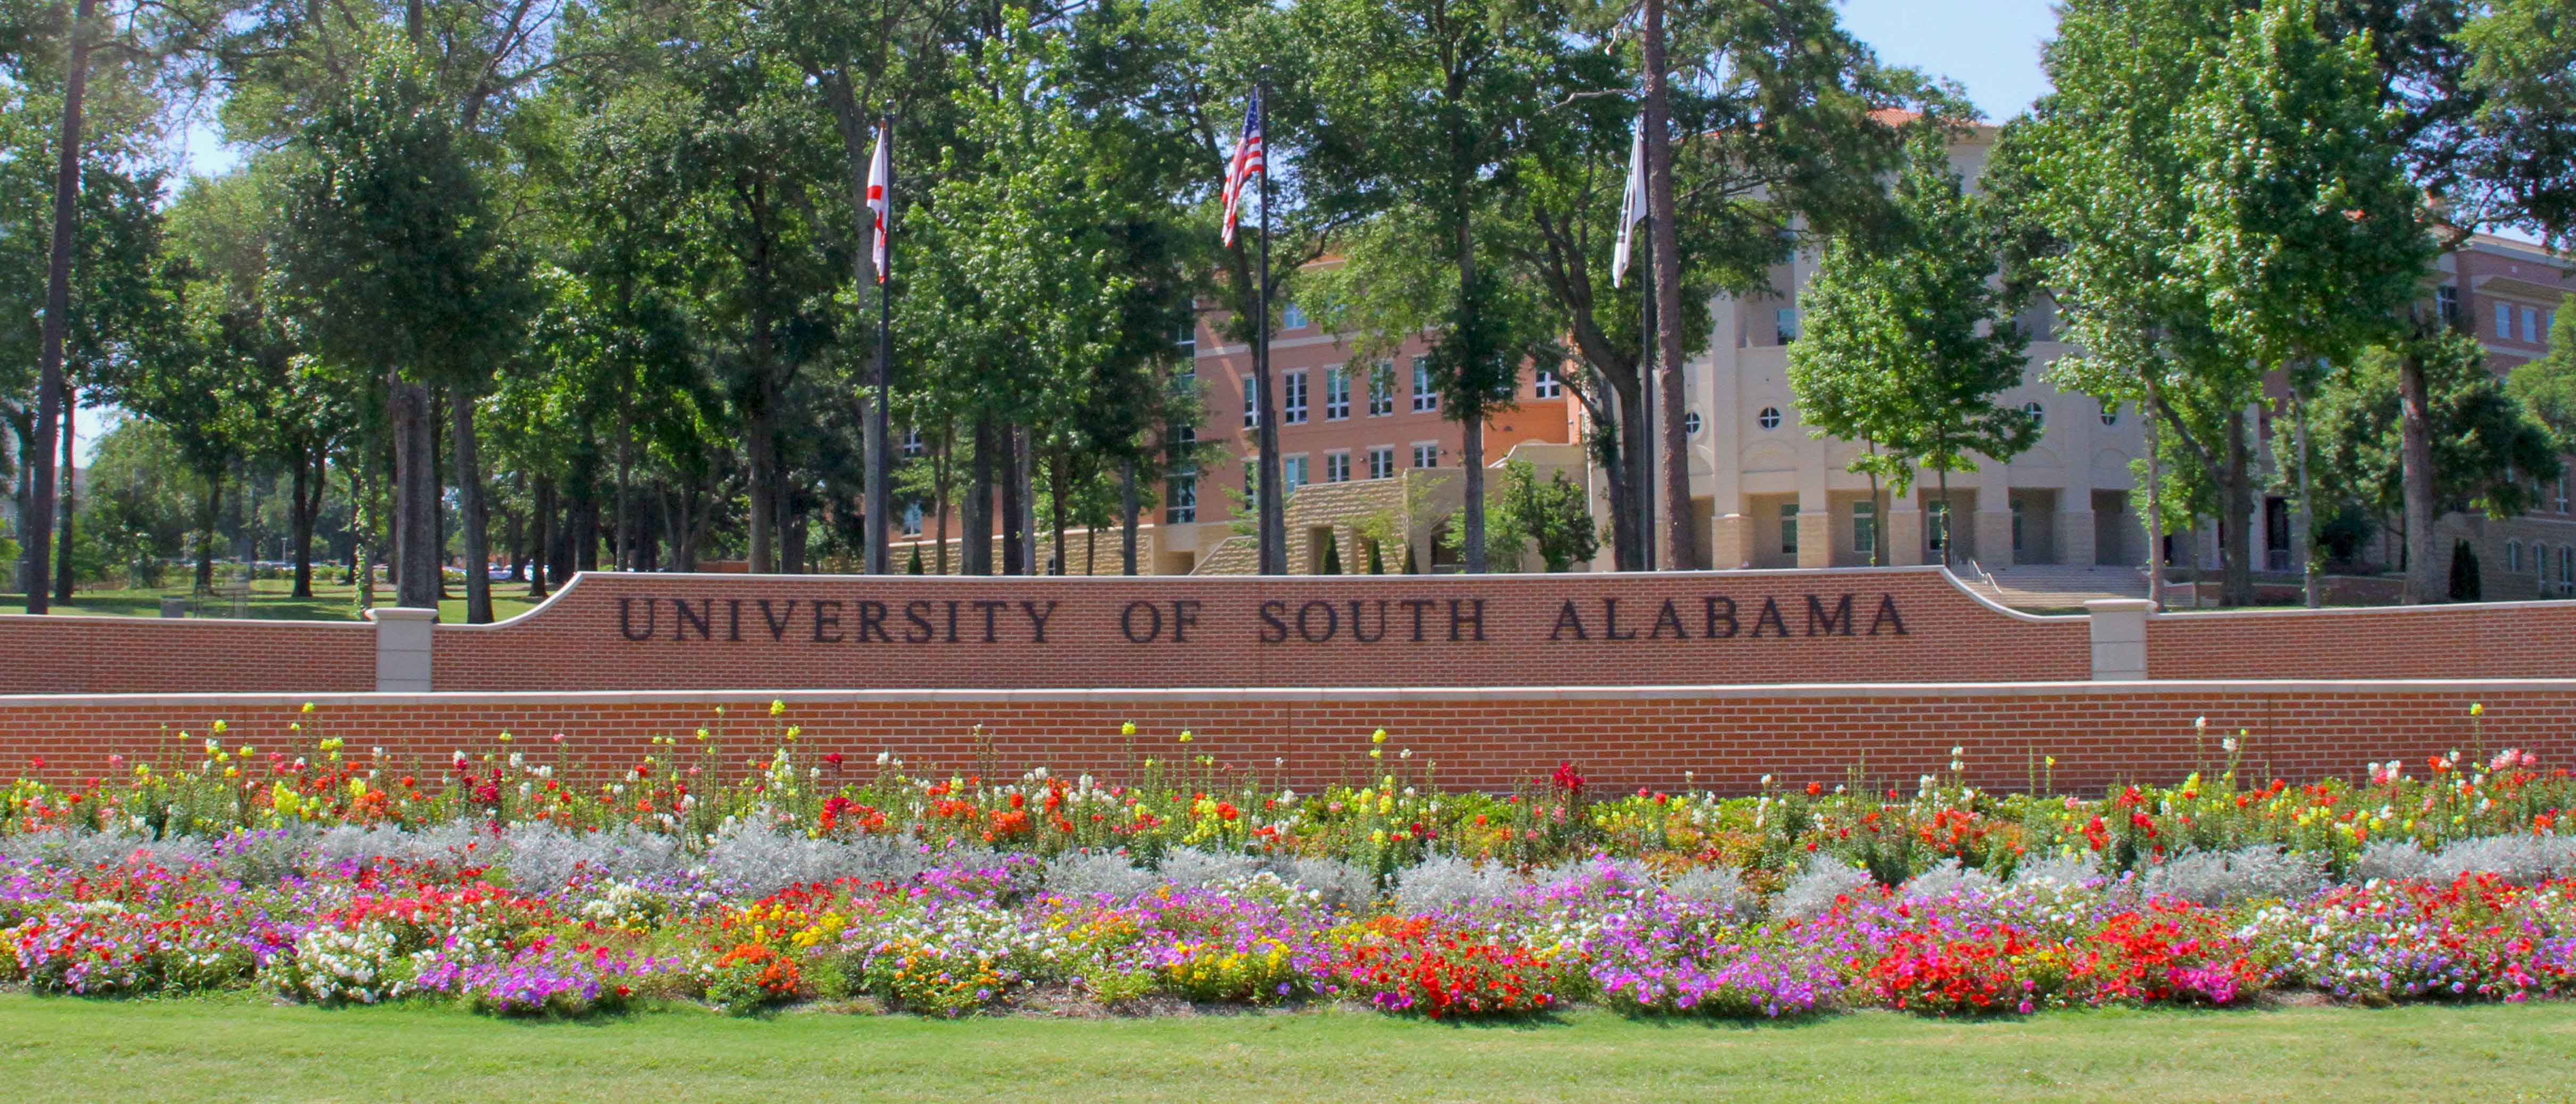 South Alabama entrance sign